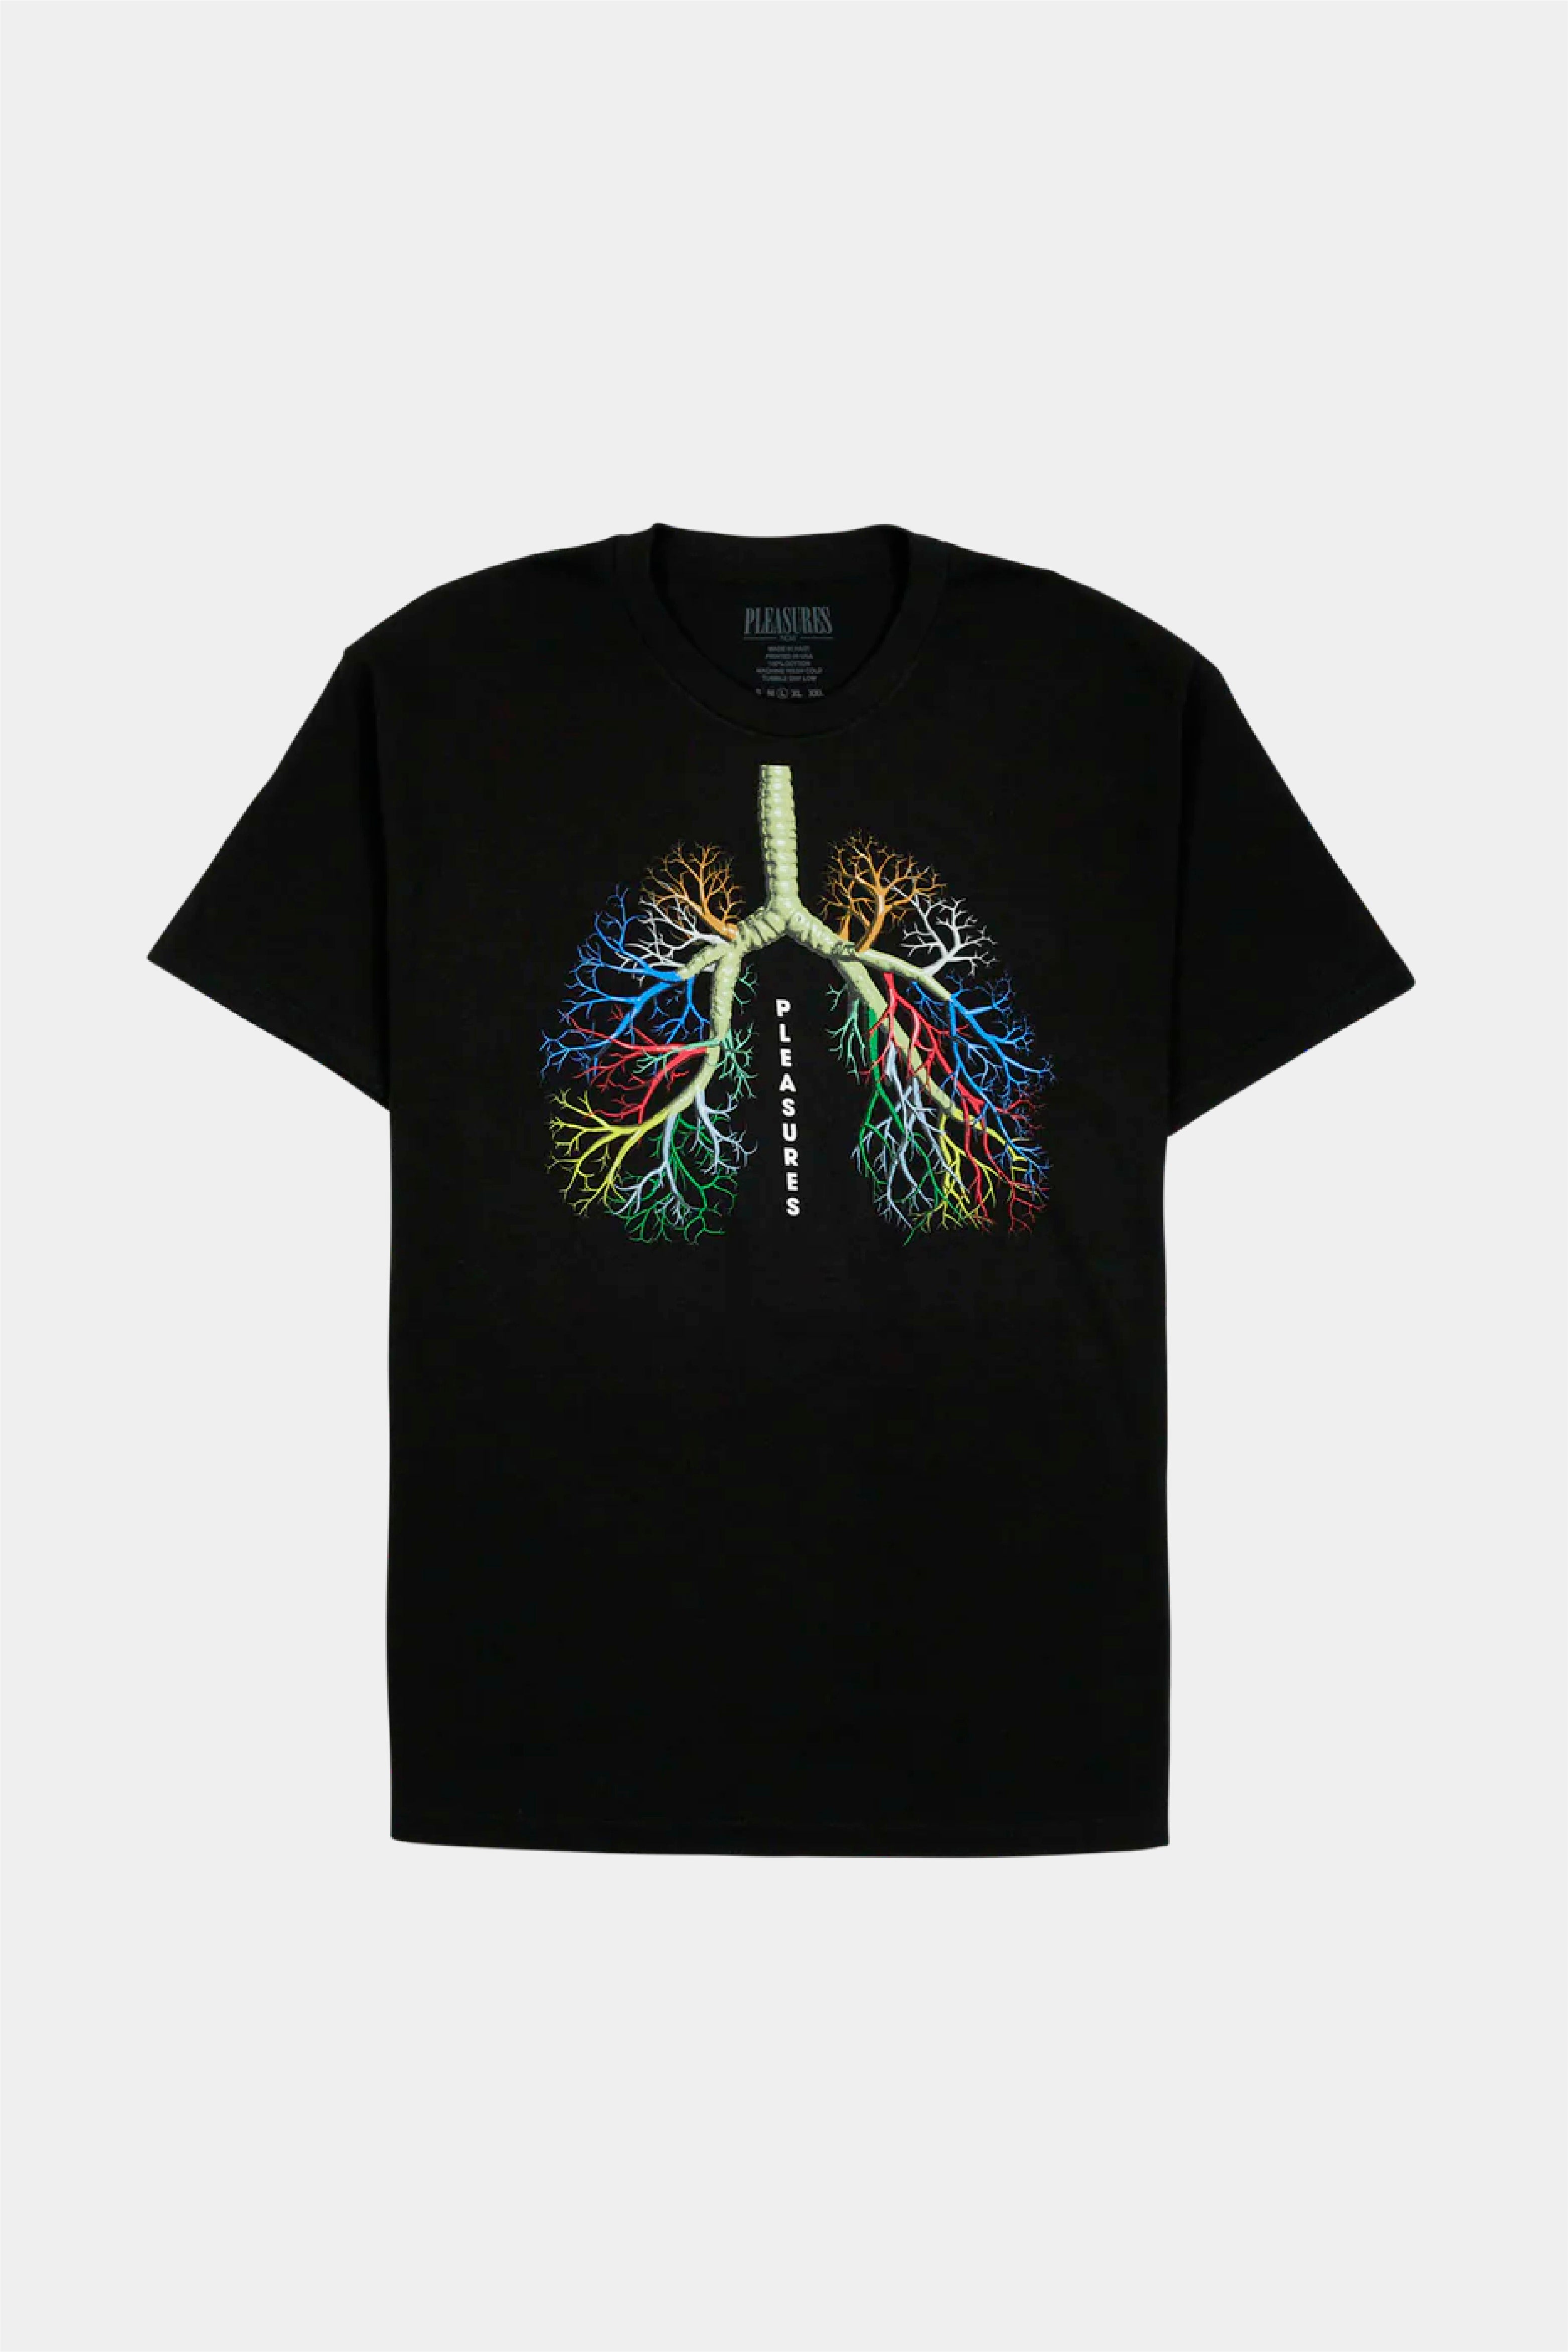 Selectshop FRAME - PLEASURES Breathe Again Tee T-Shirts Concept Store Dubai